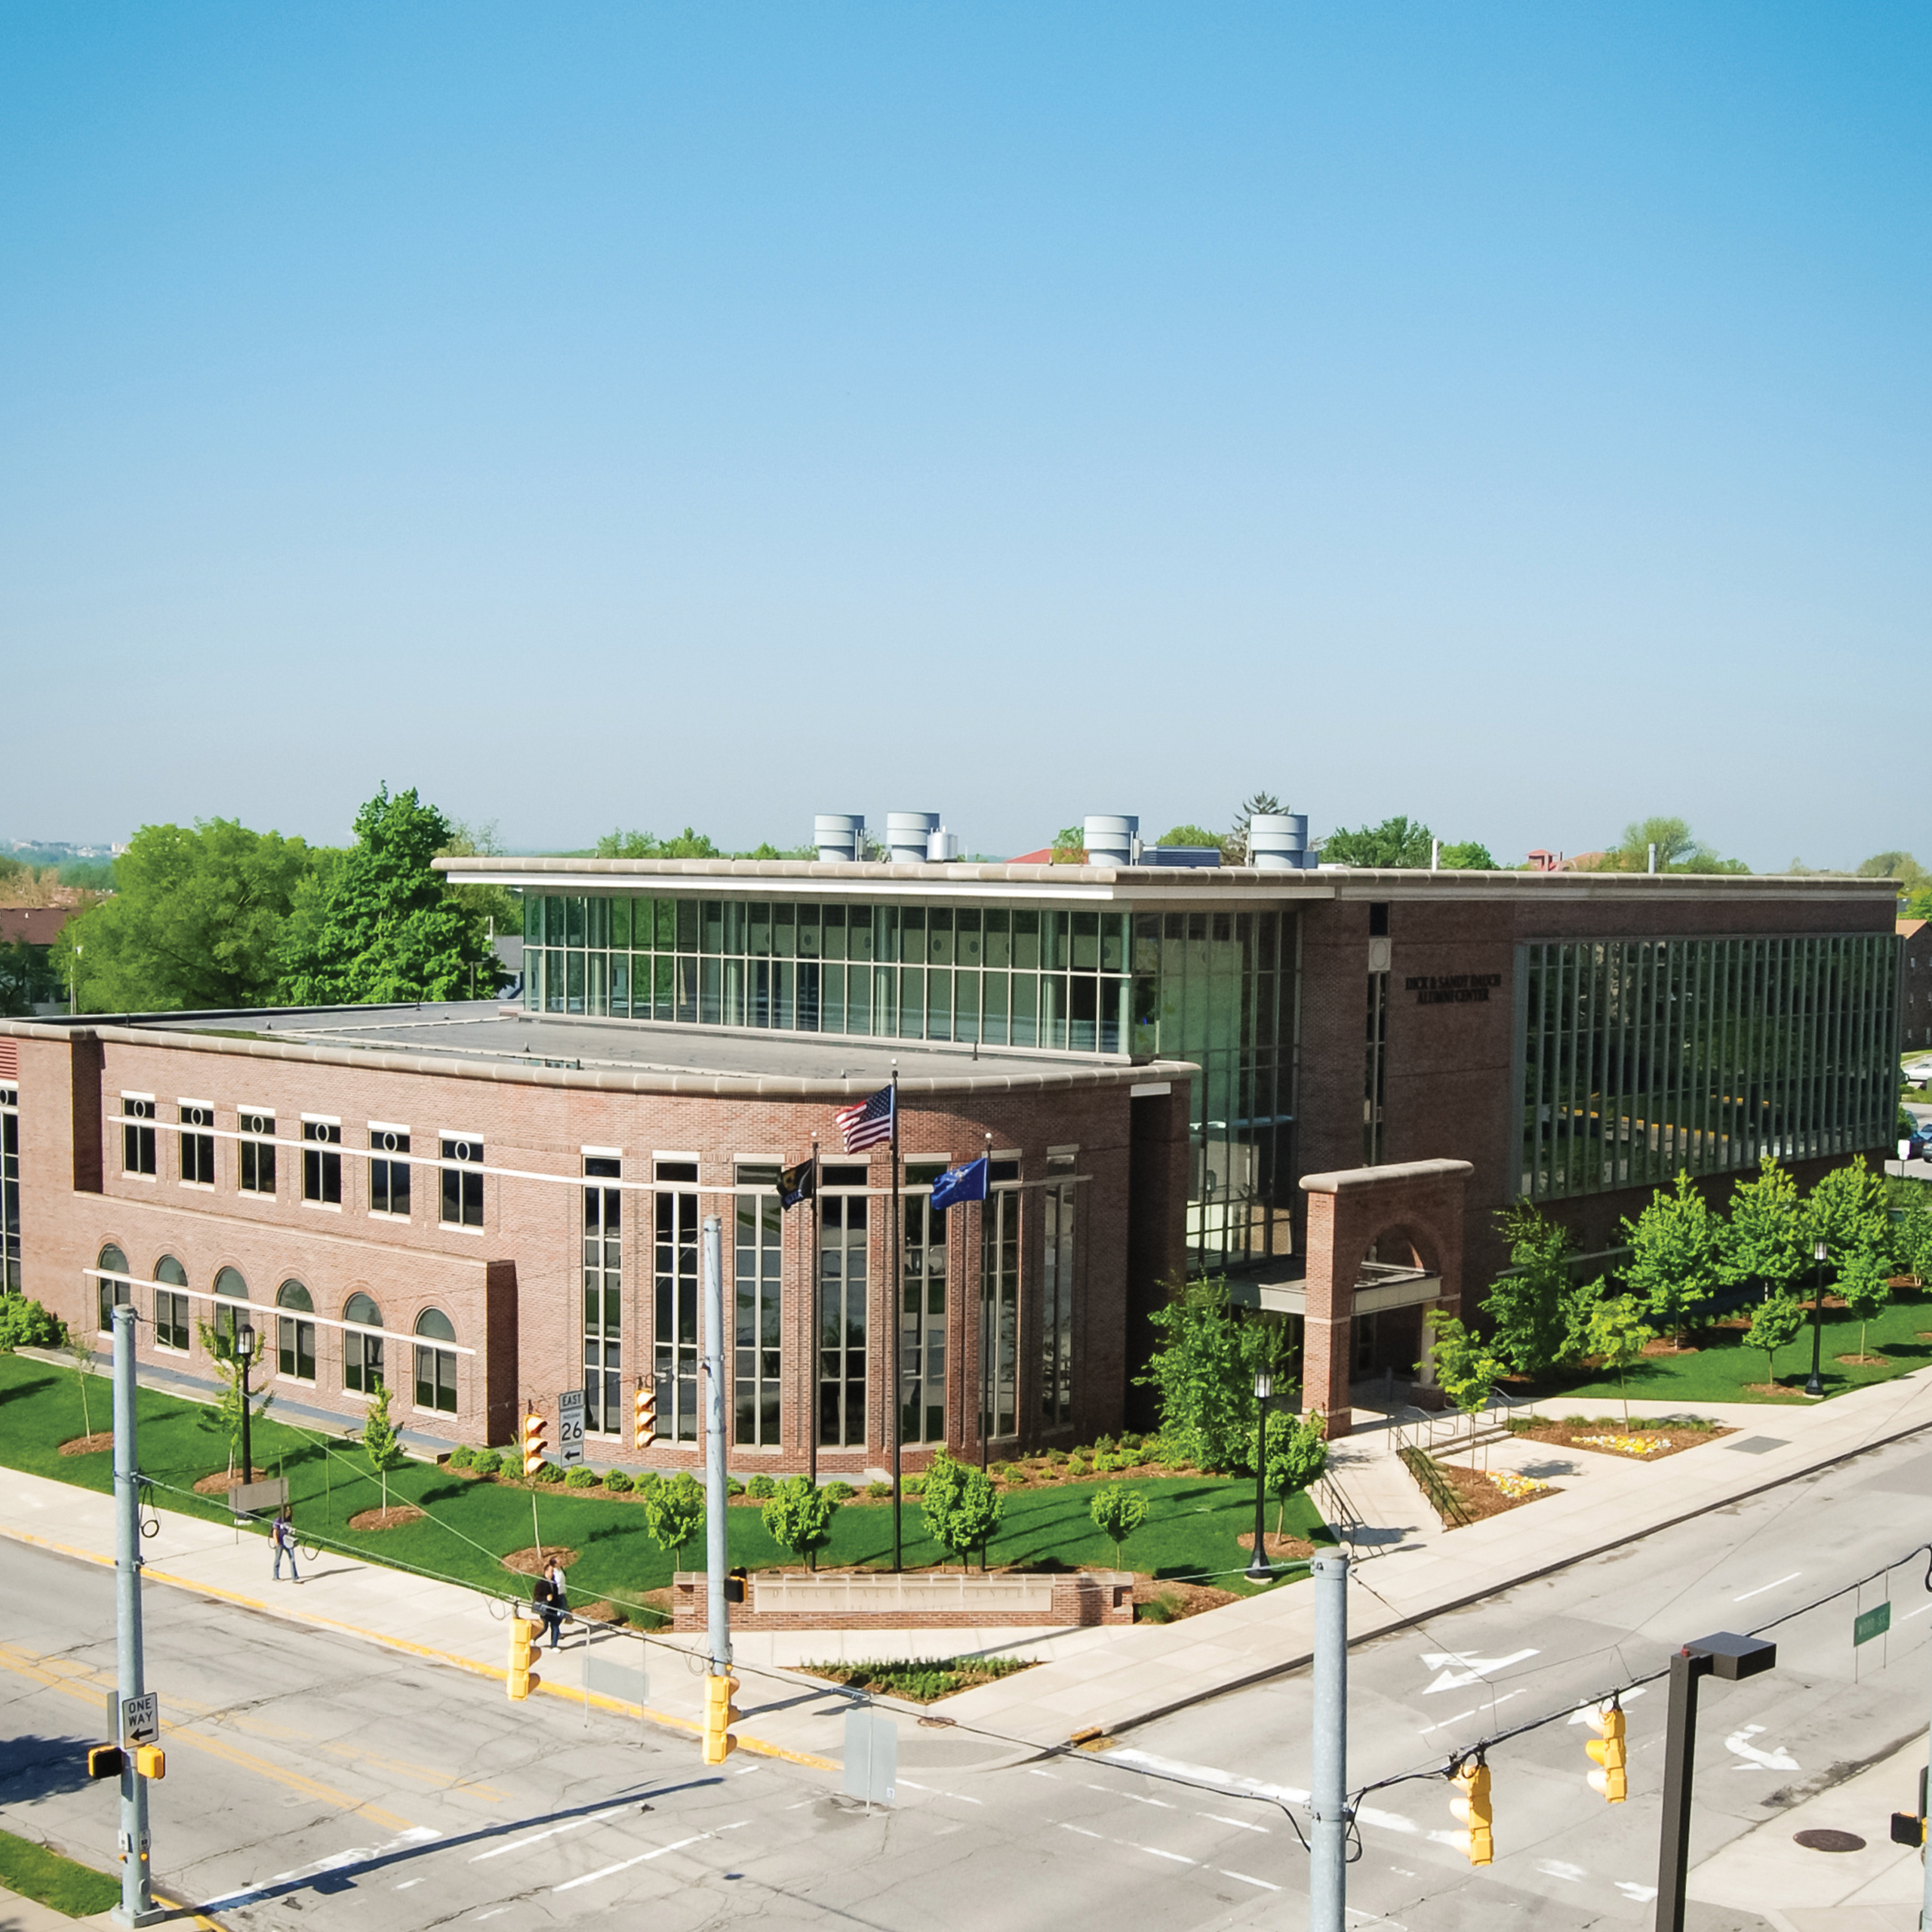 An image of Dauch Alumni Center at Purdue University